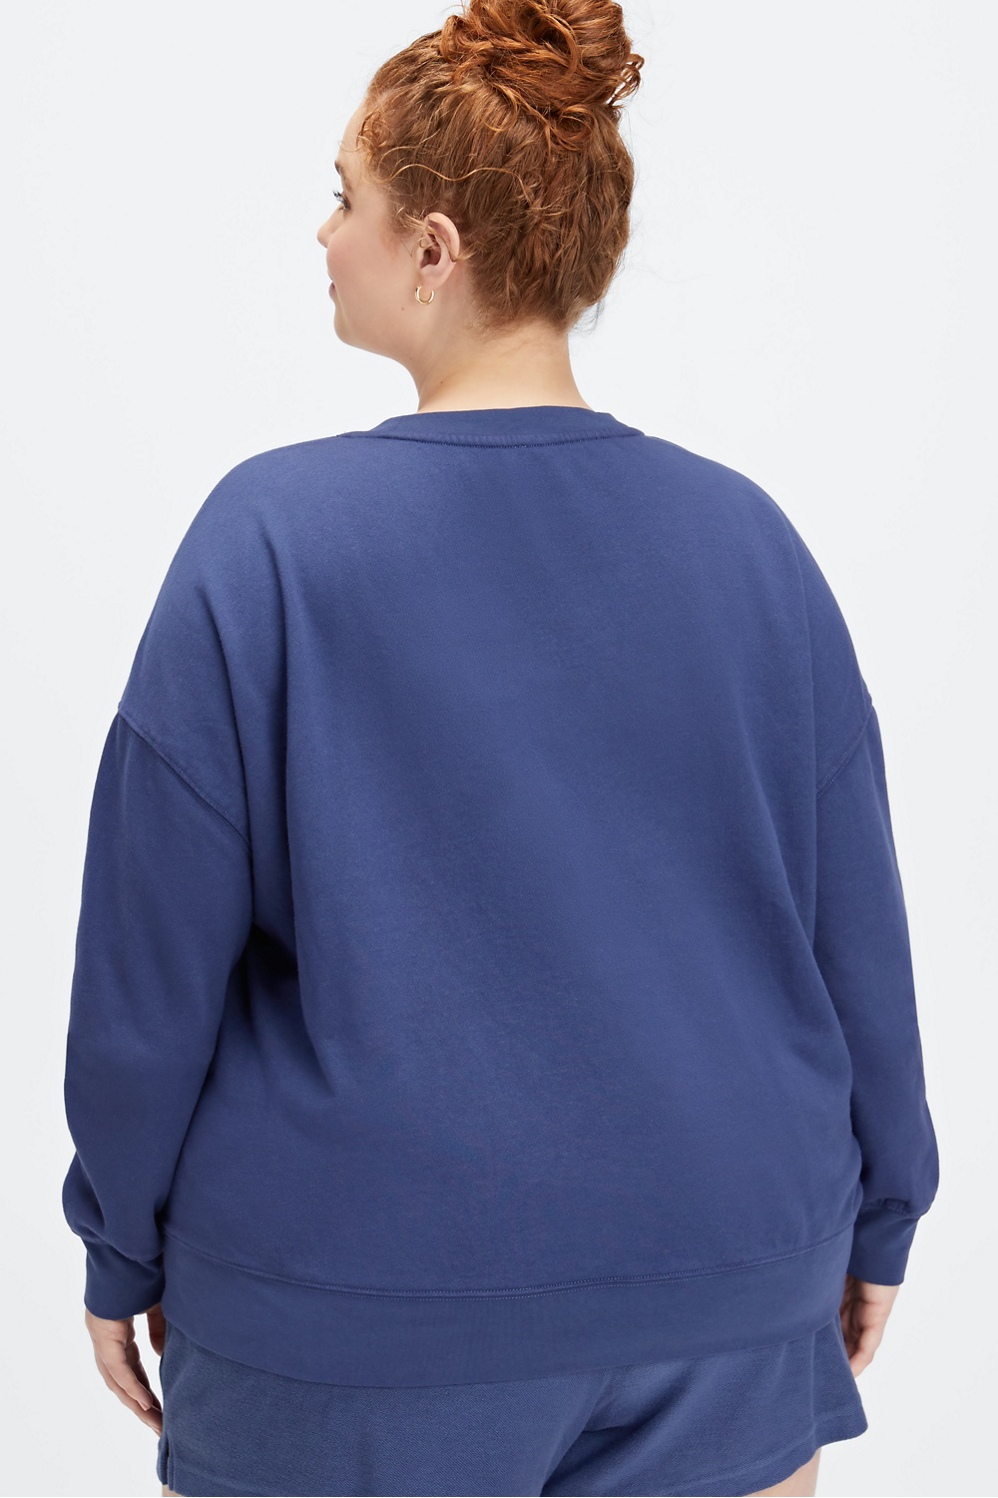 Freeda  Oversized Sweatshirt and Legging Set (Teal) – Shop-twelve29